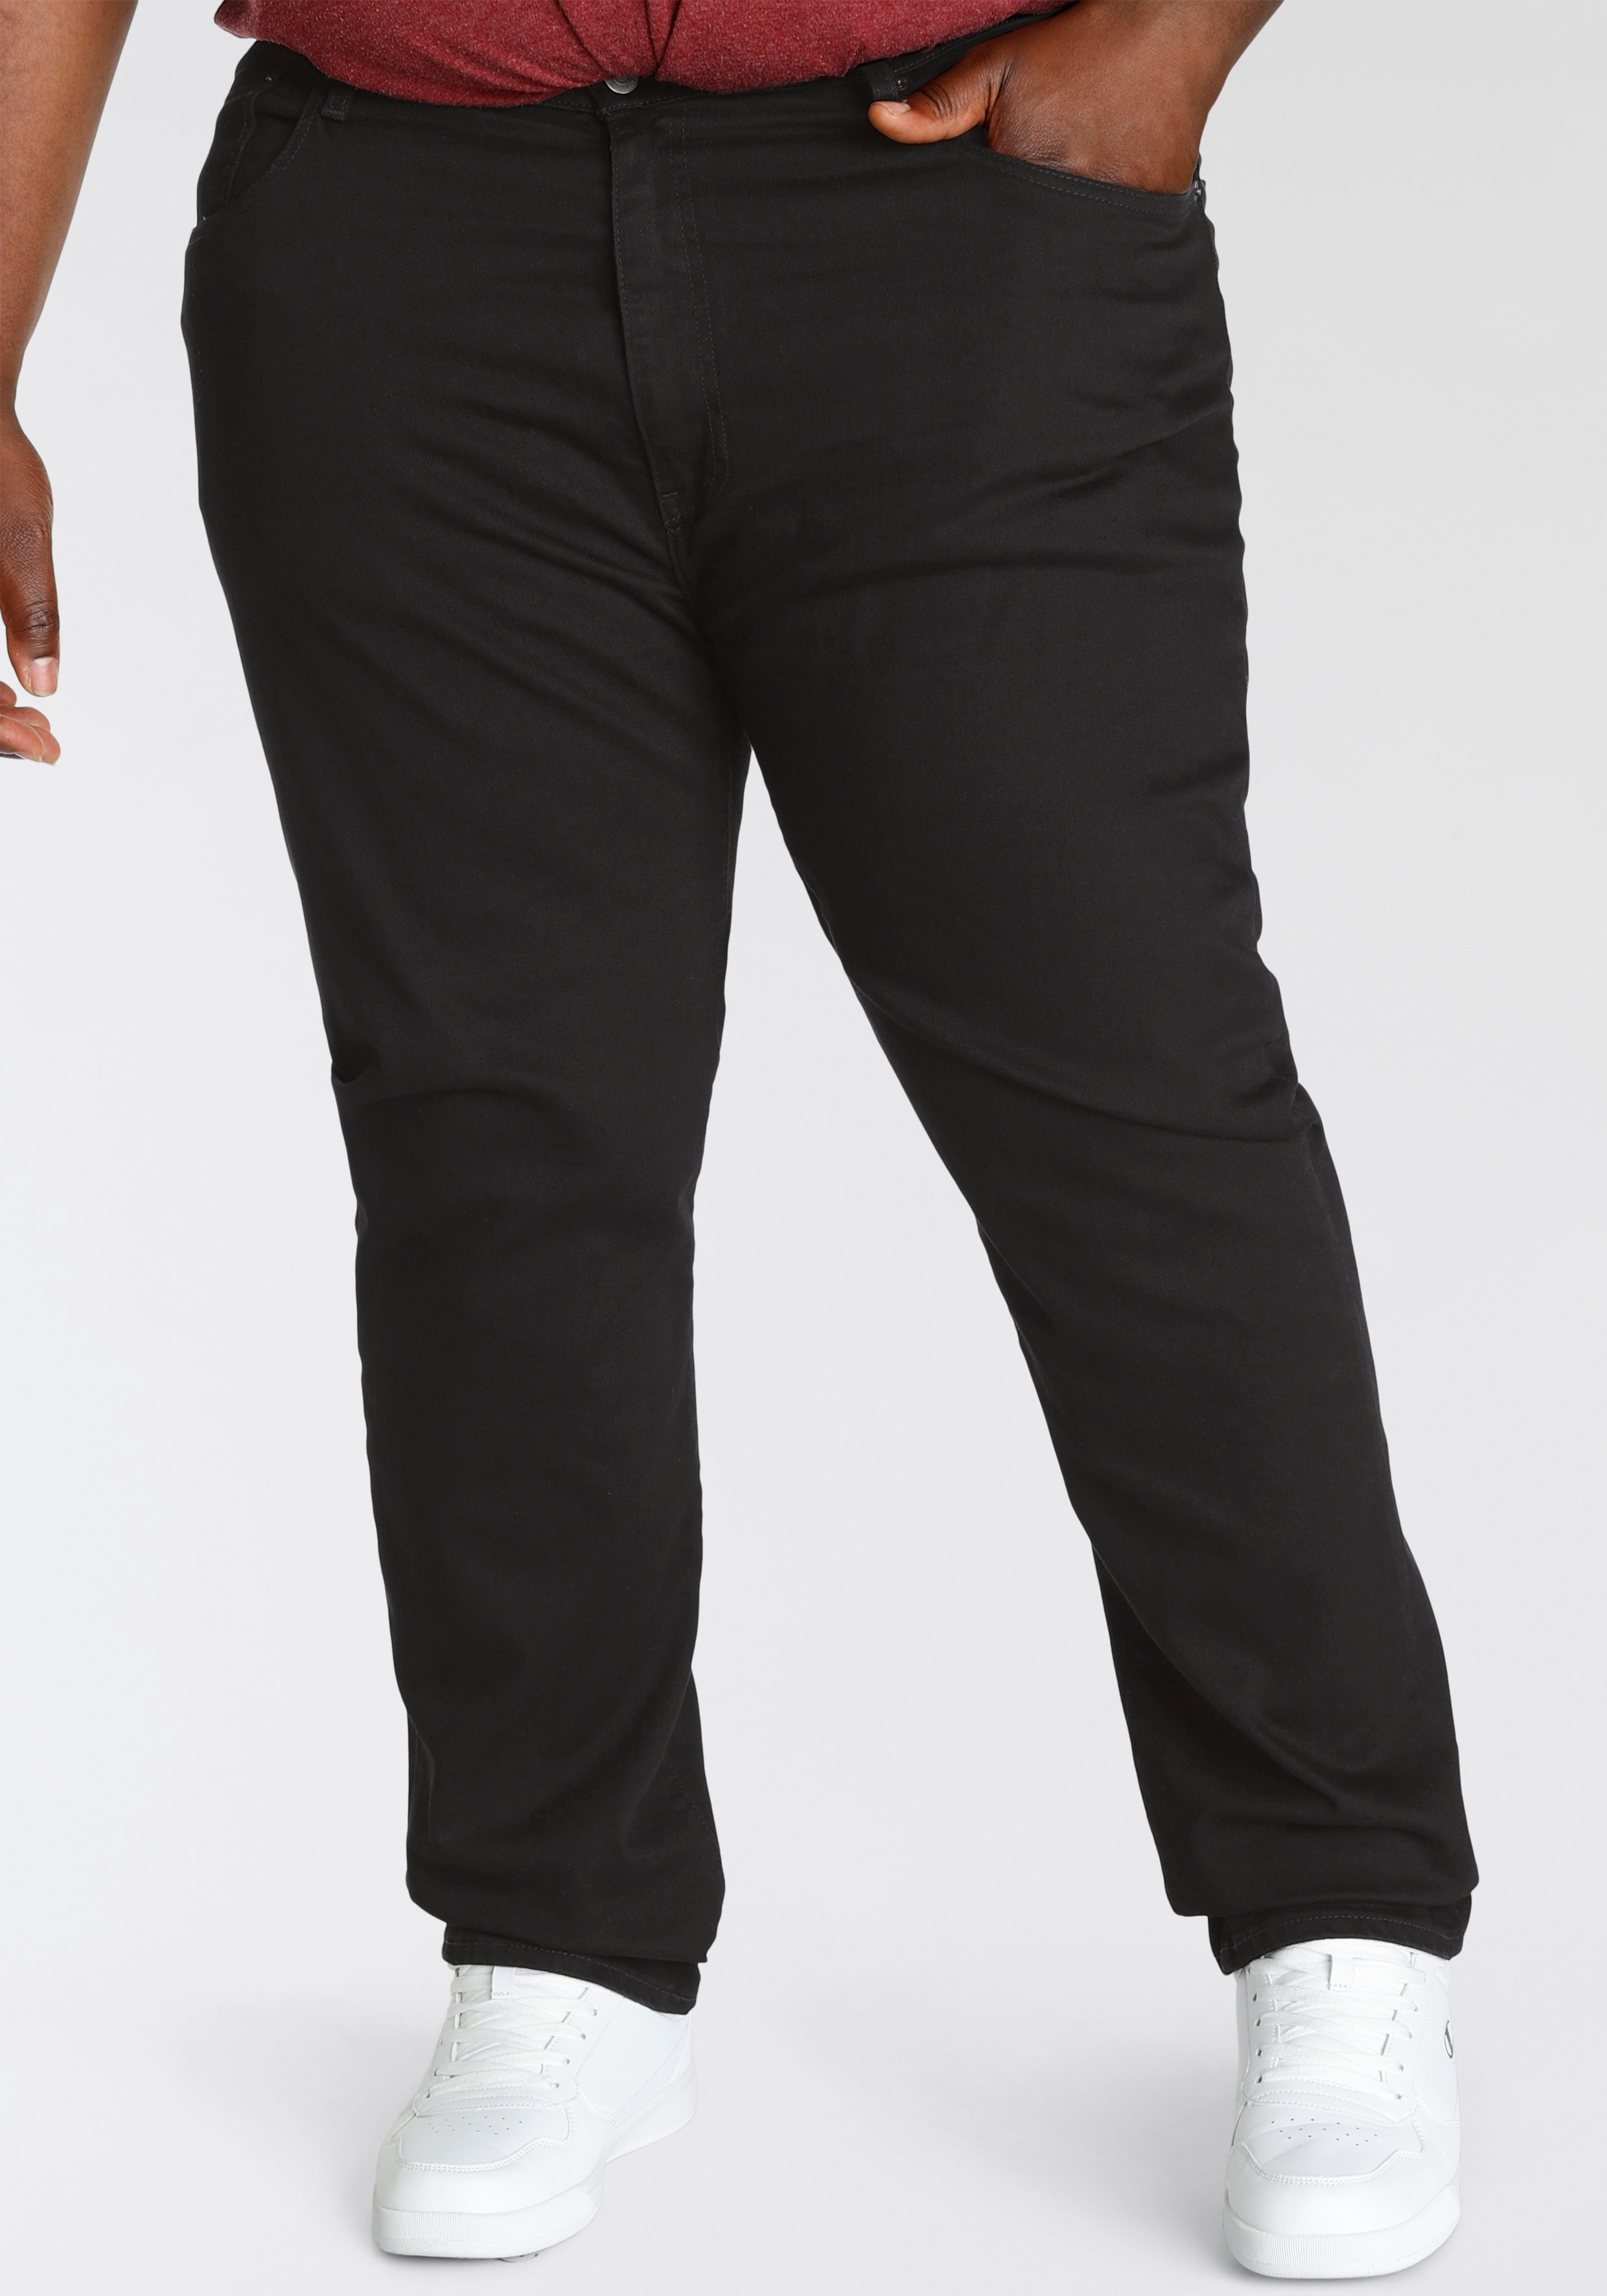 Tapered-fit-Jeans LEVI'S PLUS "512" Gr. 44, Länge 32, schwarz (black denim) Herren Jeans Tapered-Jeans